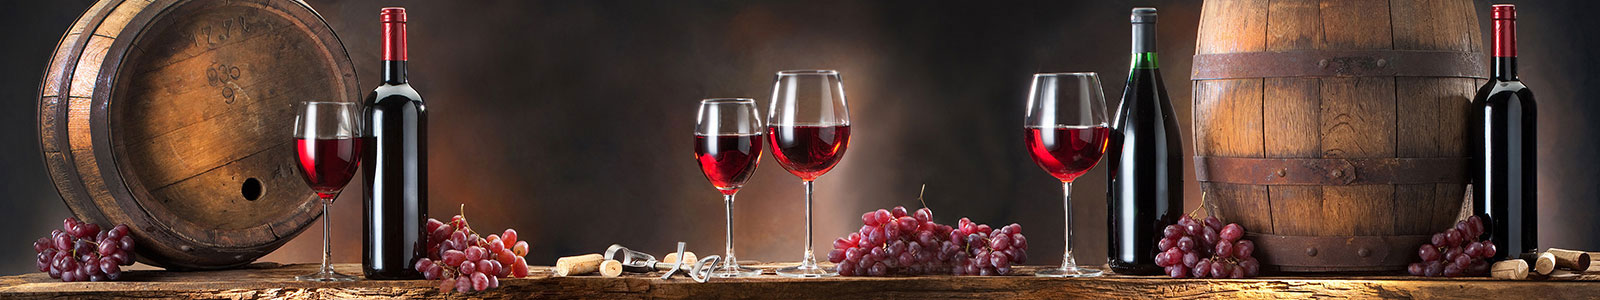 №1590 - Бокалы вина